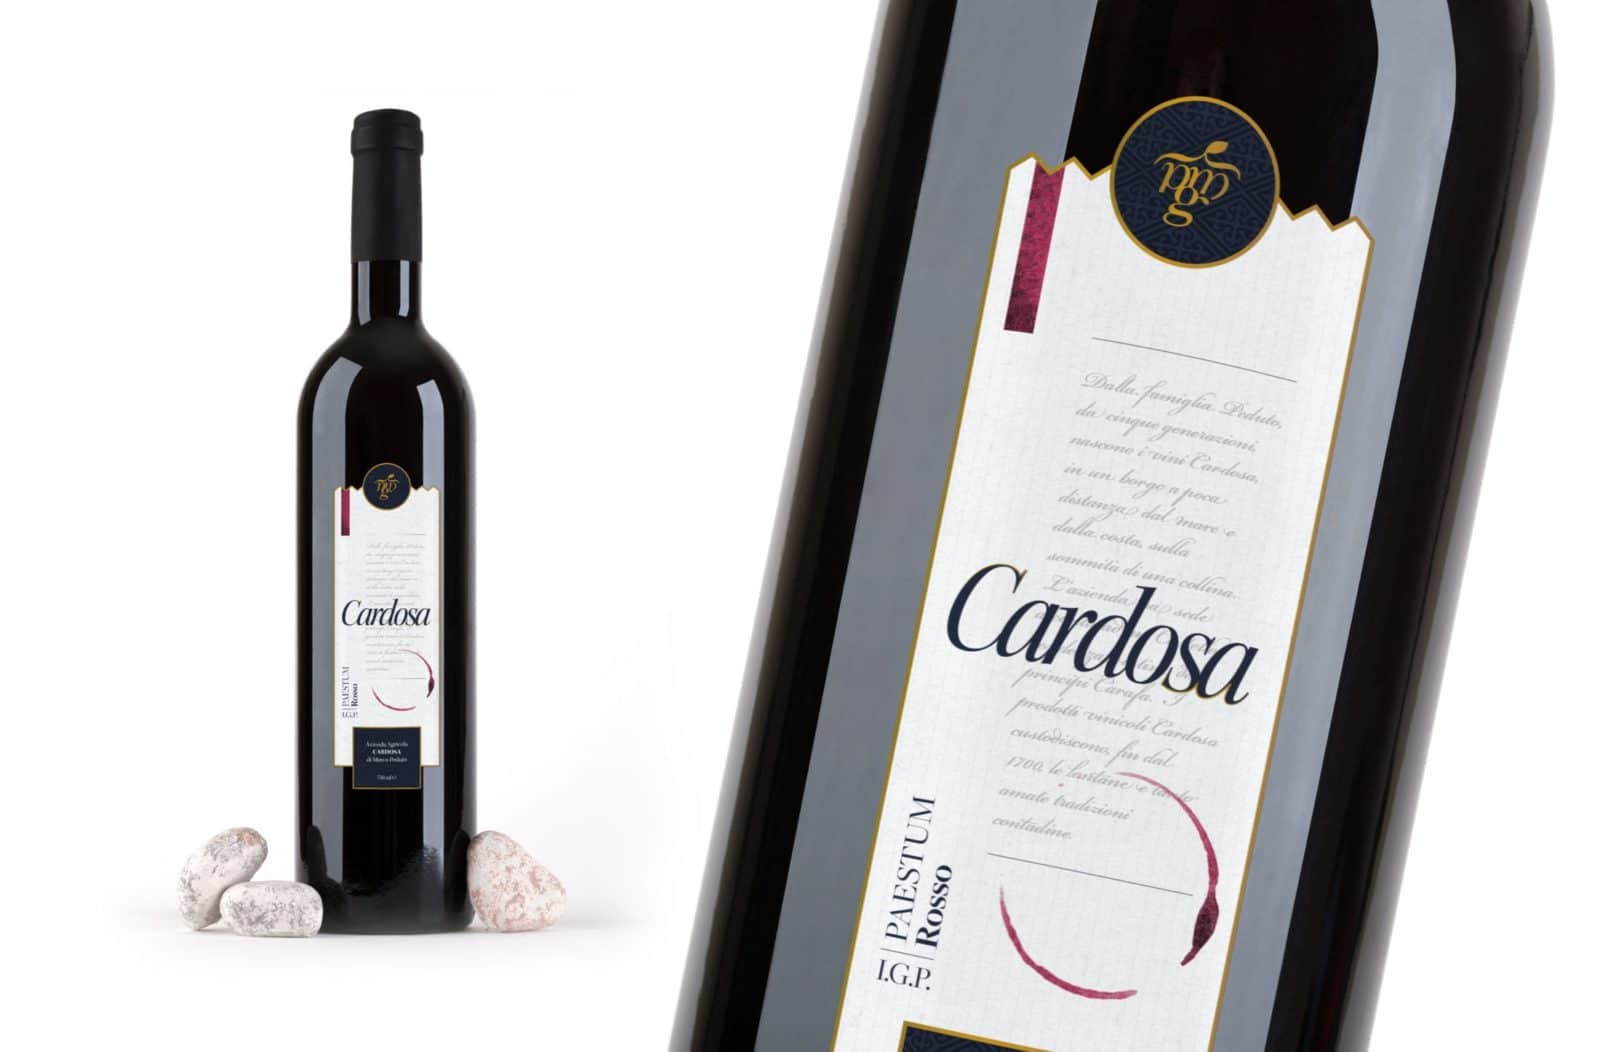 Cardosa wine labels